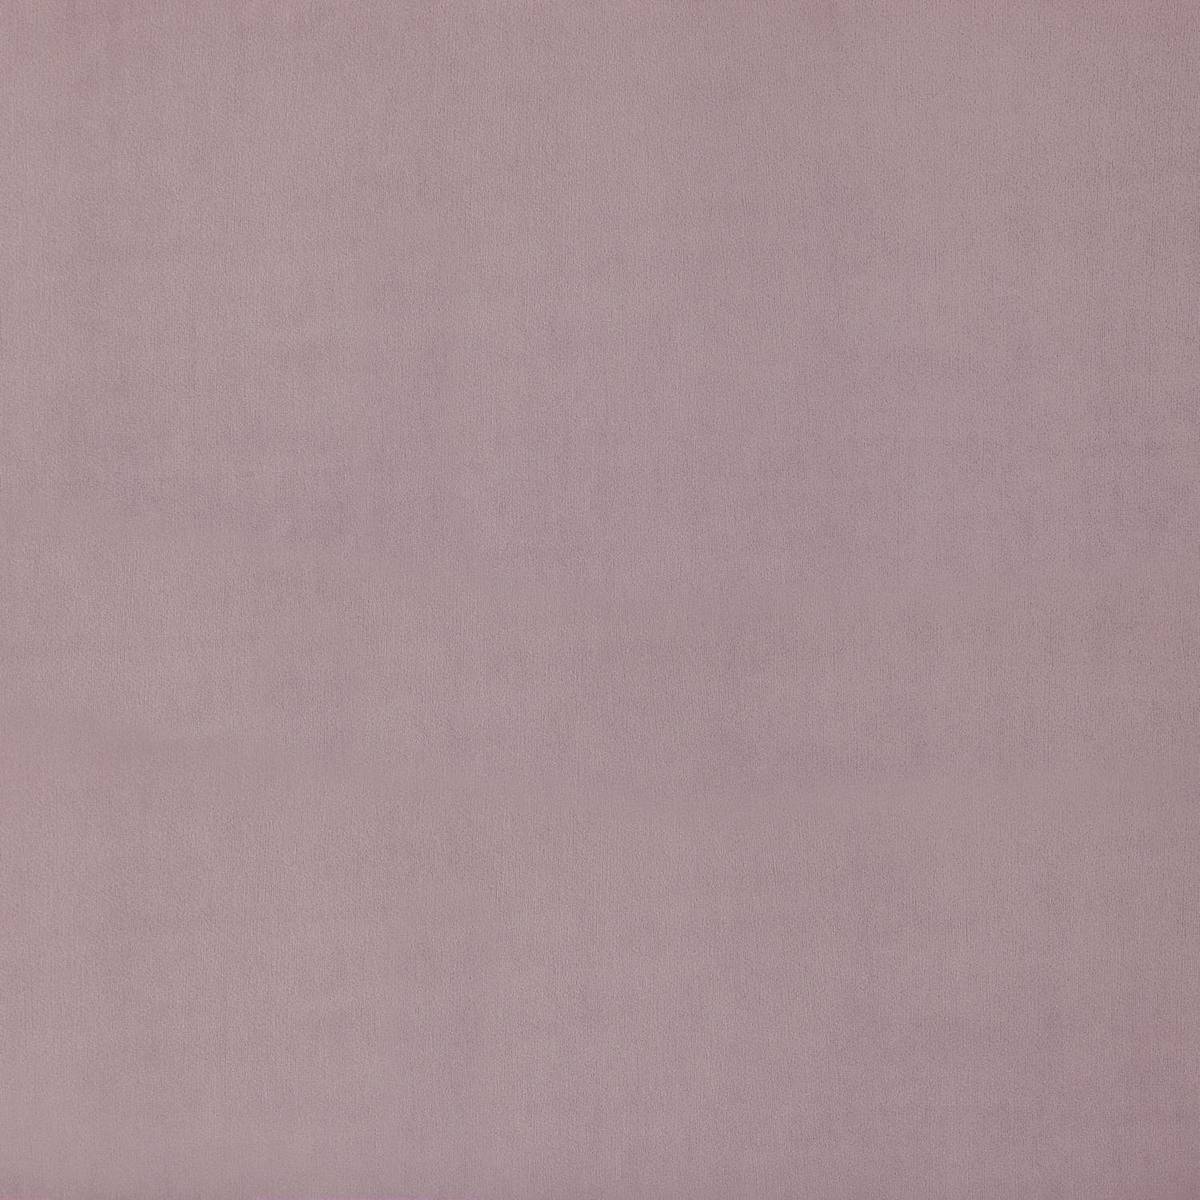 Entity Plains Crocus Fabric by Harlequin